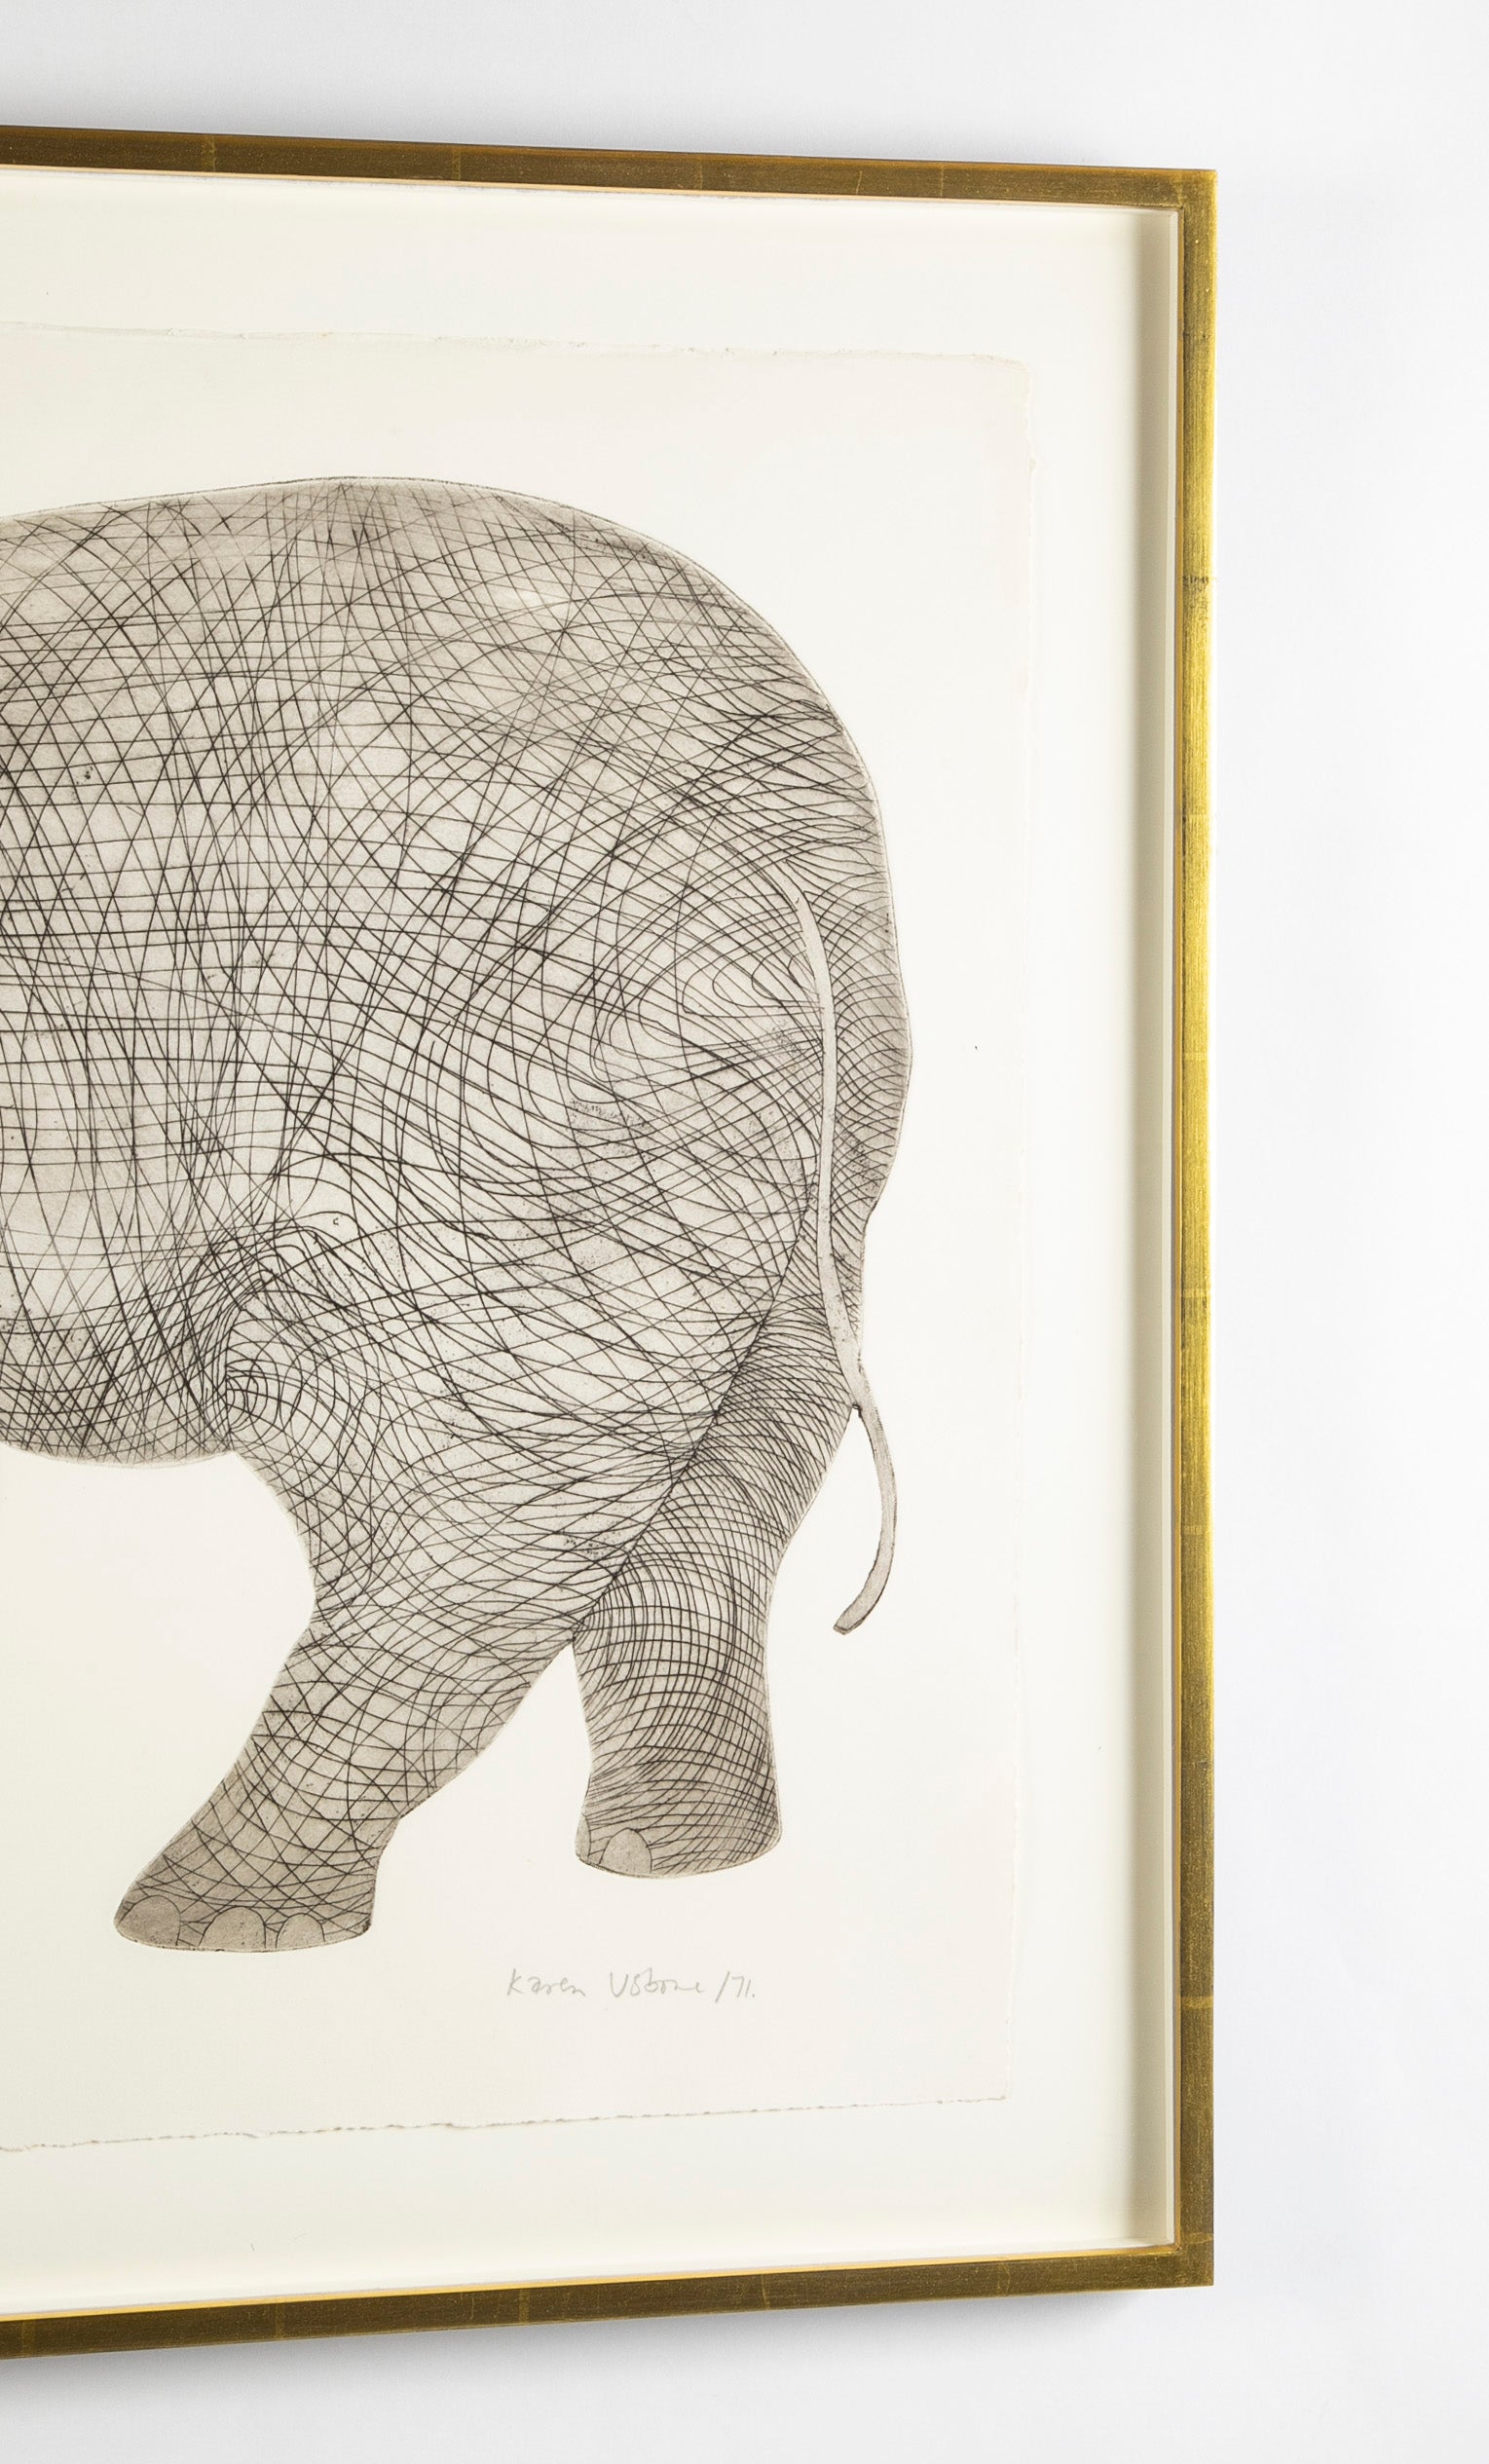 "Elephant" a Lithograph by Karen Usborne